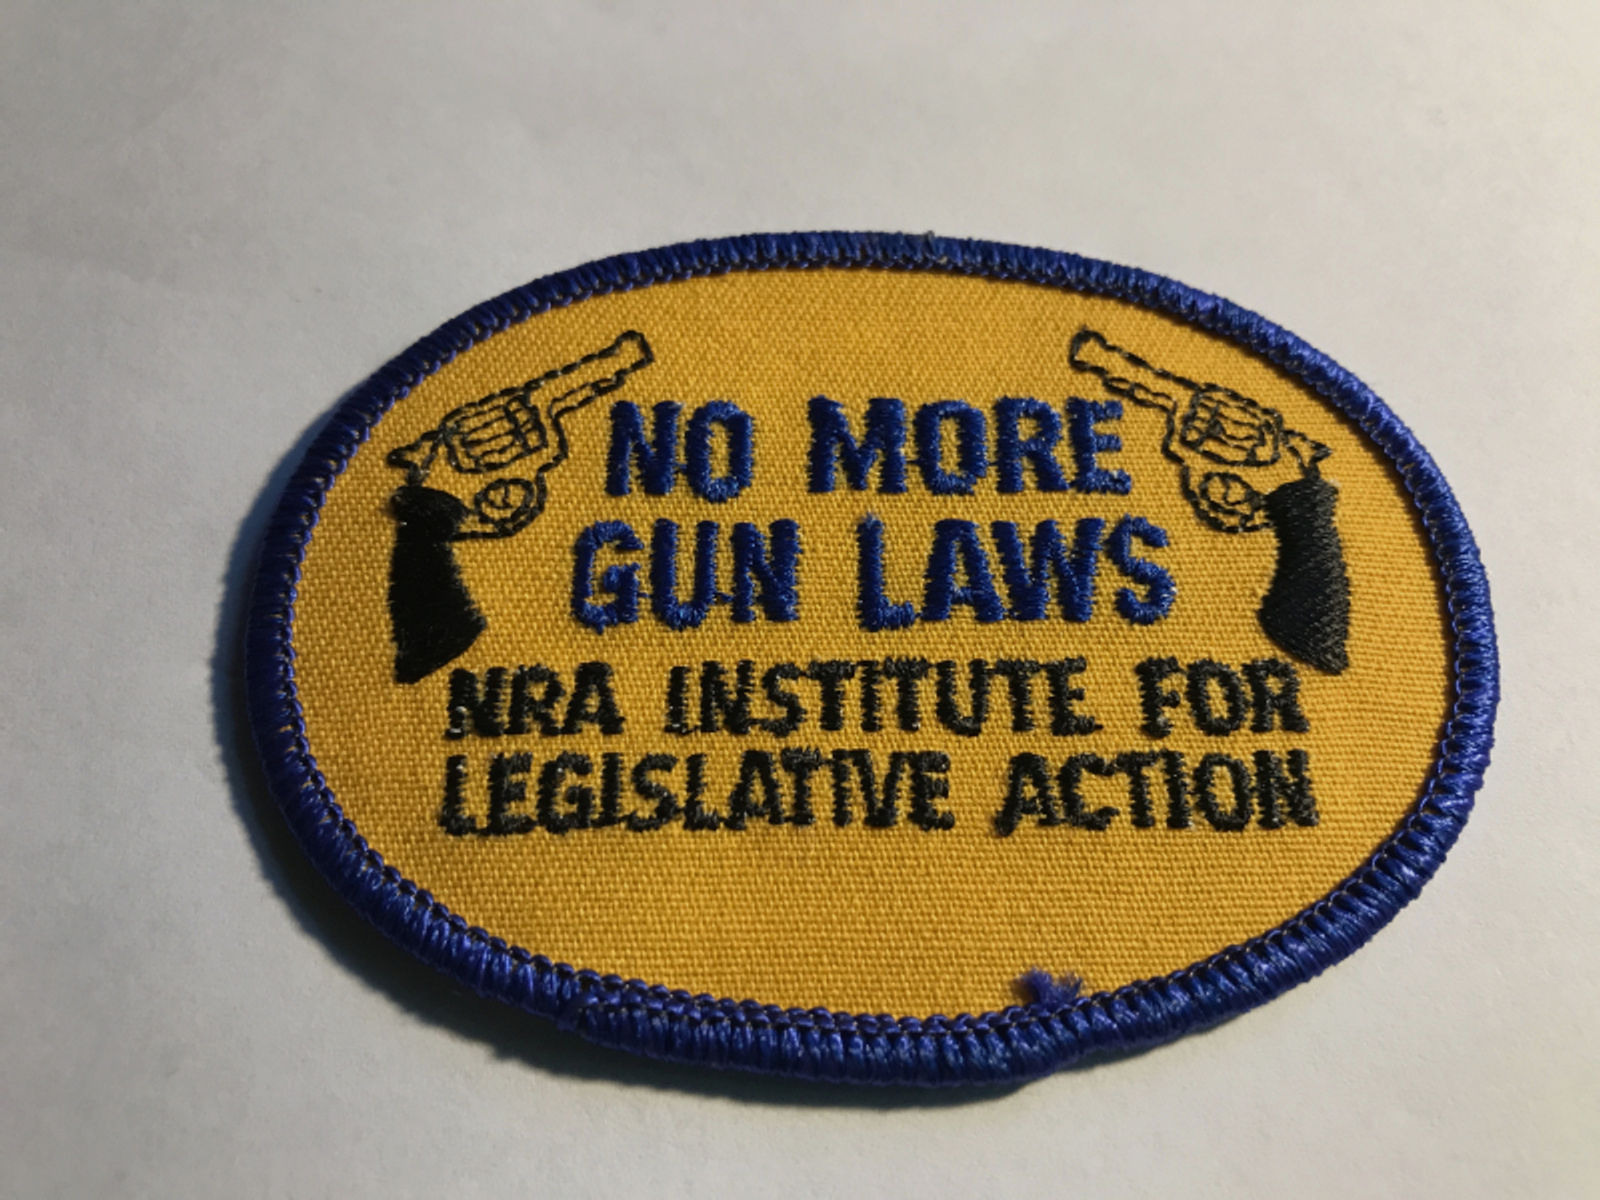 Aufnäher National Rifle Association, No more Gun Laws